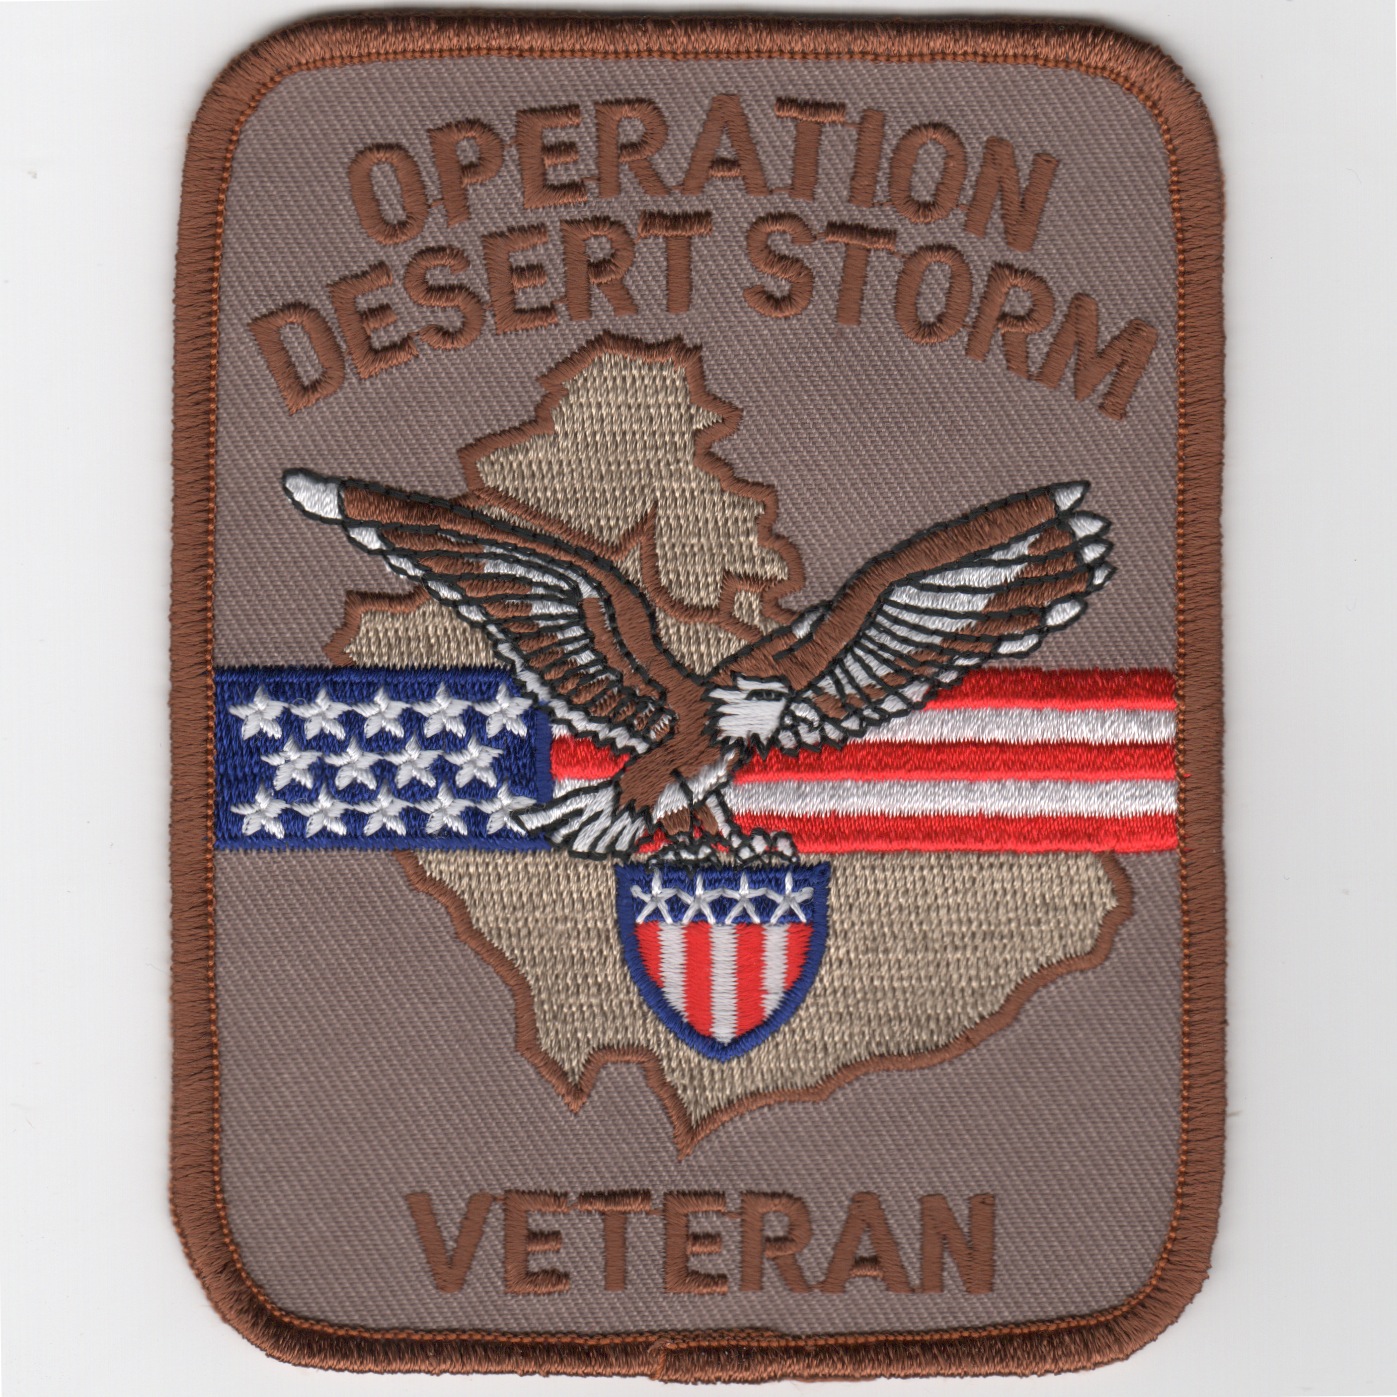 Operation DESERT STORM VETERAN Patch (Rect/Des)